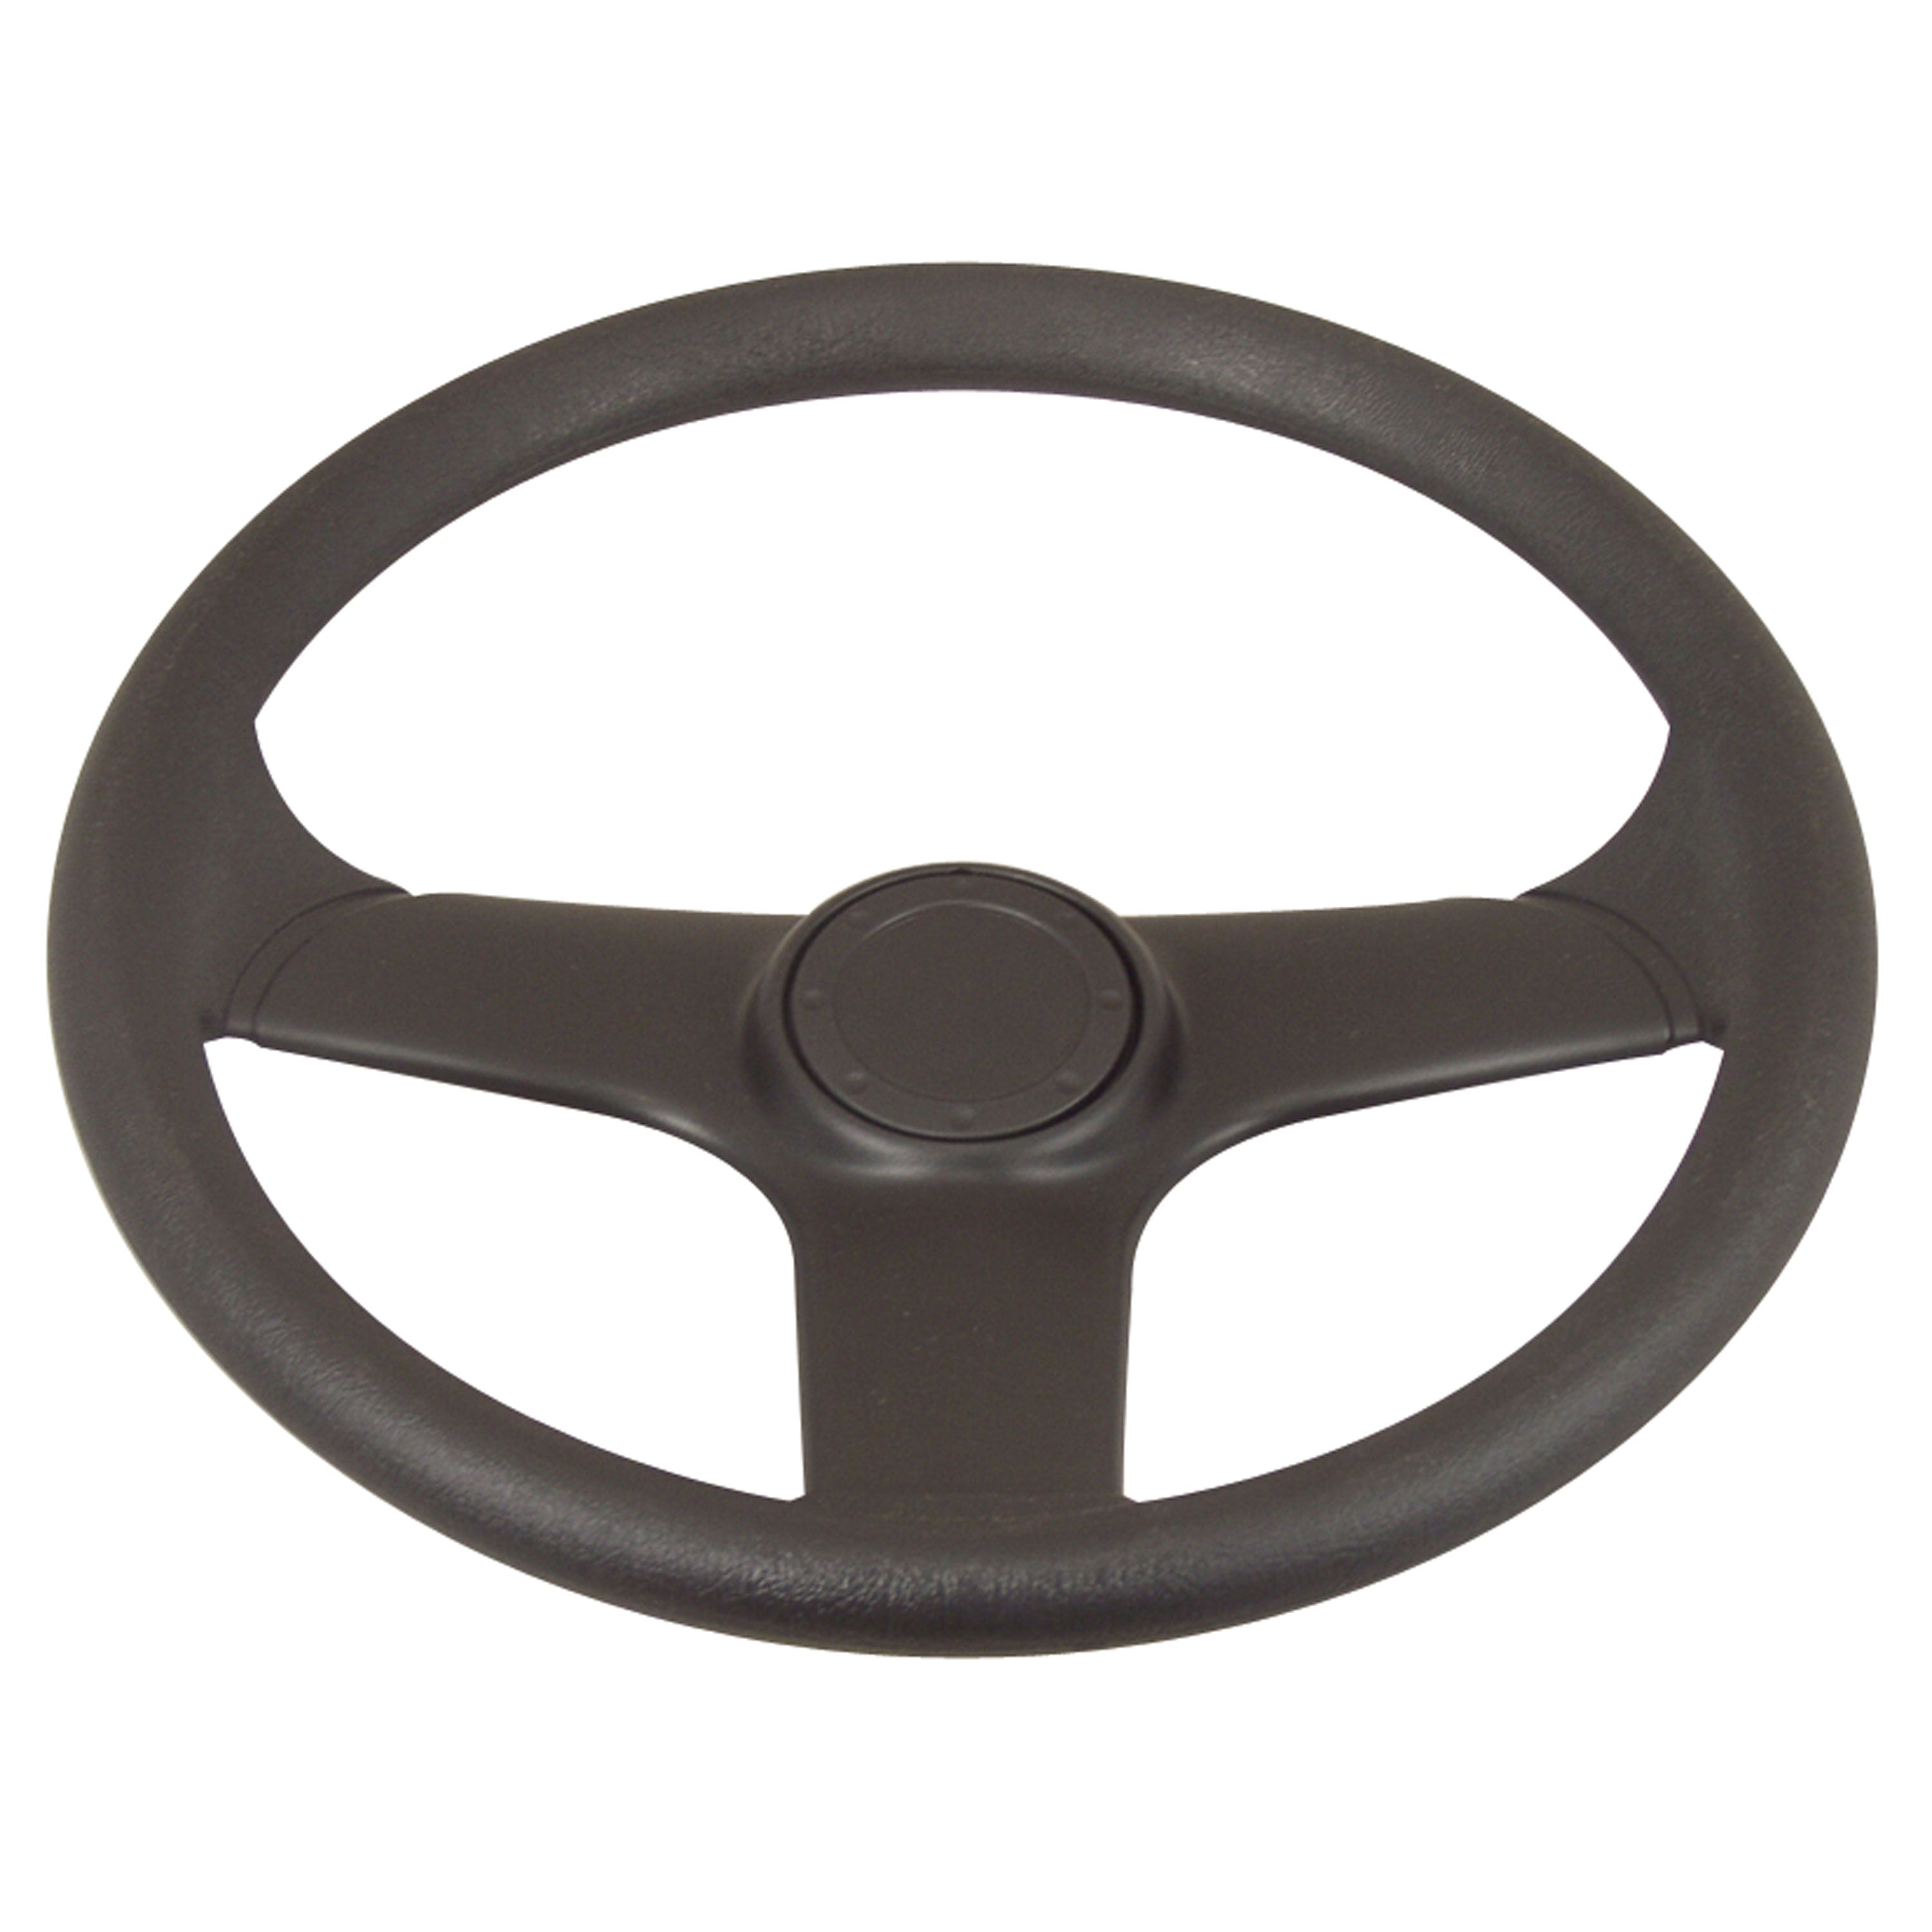 Detmar 12-2502AC Viper Soft Grip Steering Wheel